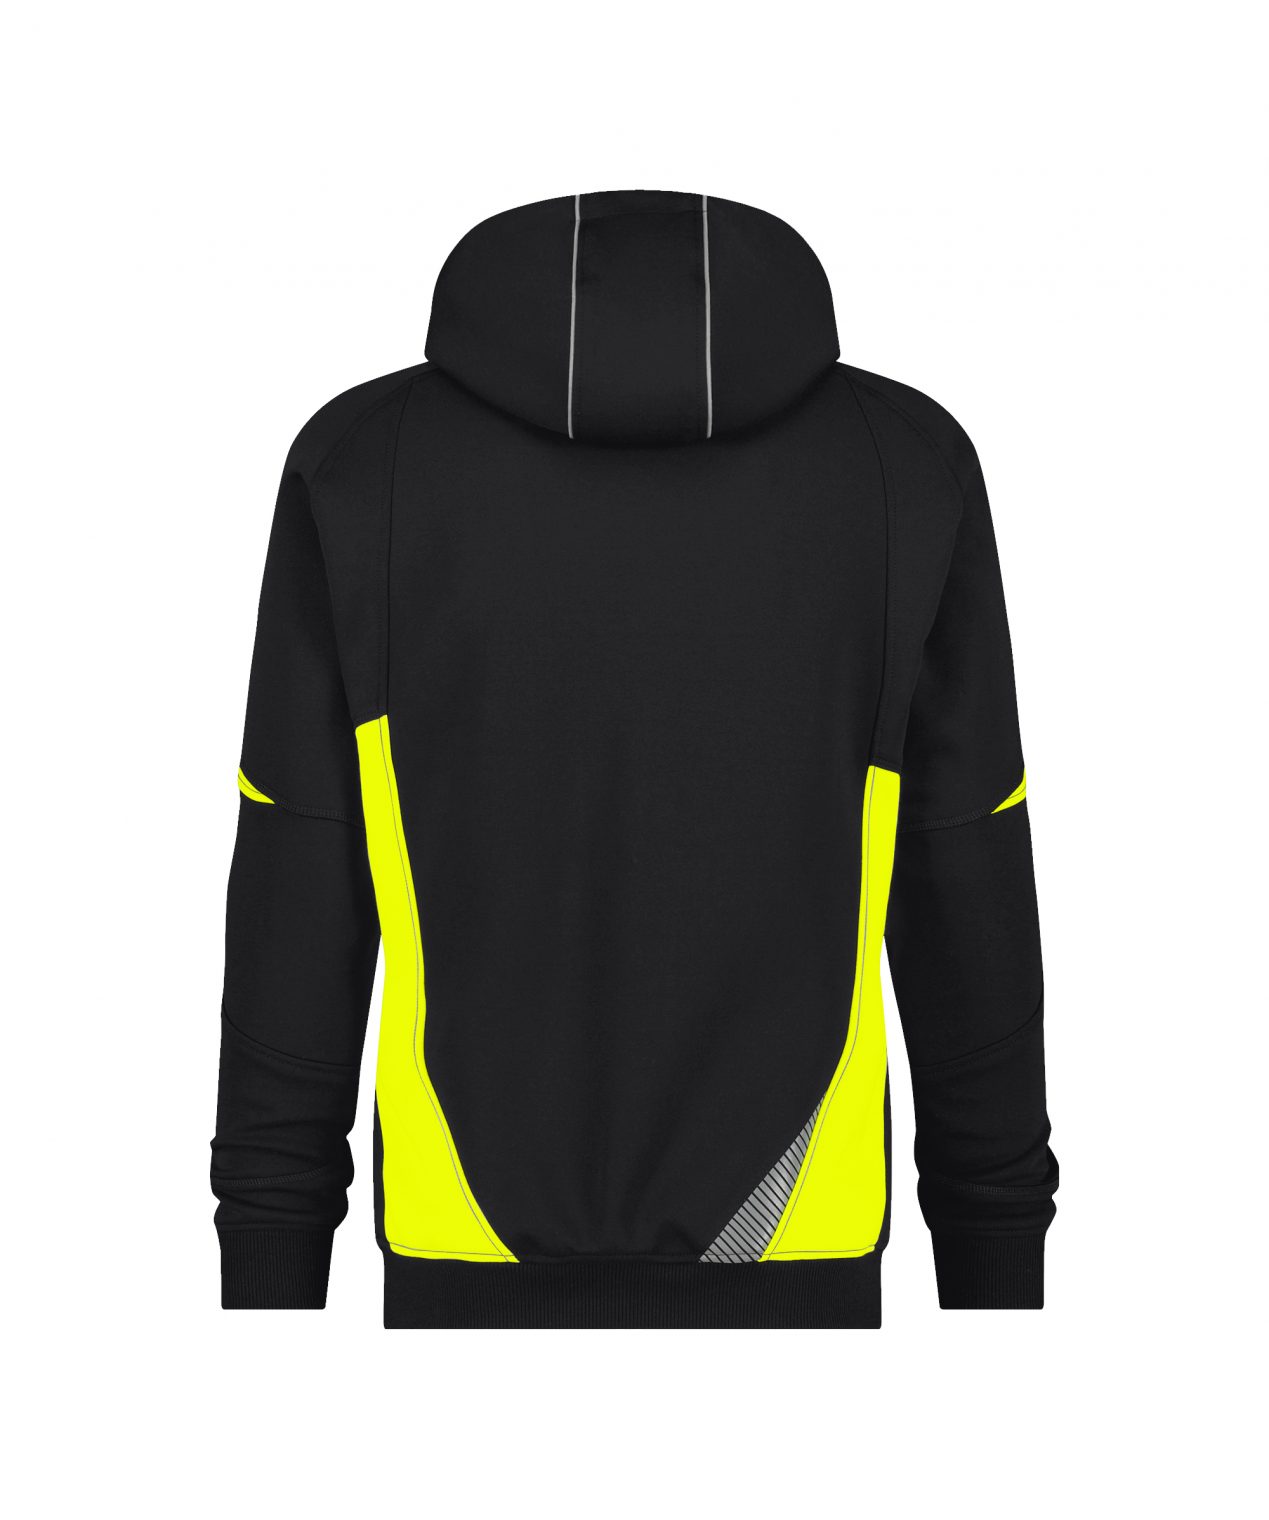 santos hooded sweatshirt black fluo yellow back